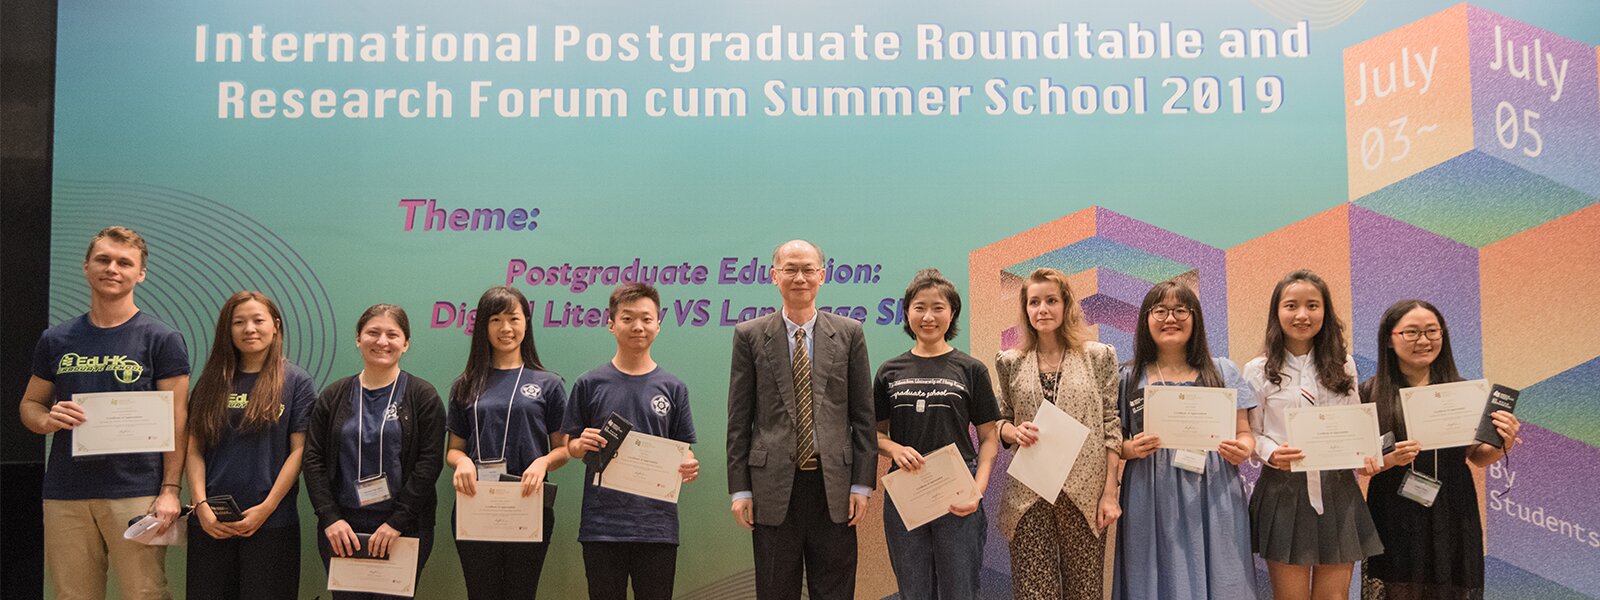 International Postgraduate Roundtable and Research Forum cum Summer School 2019